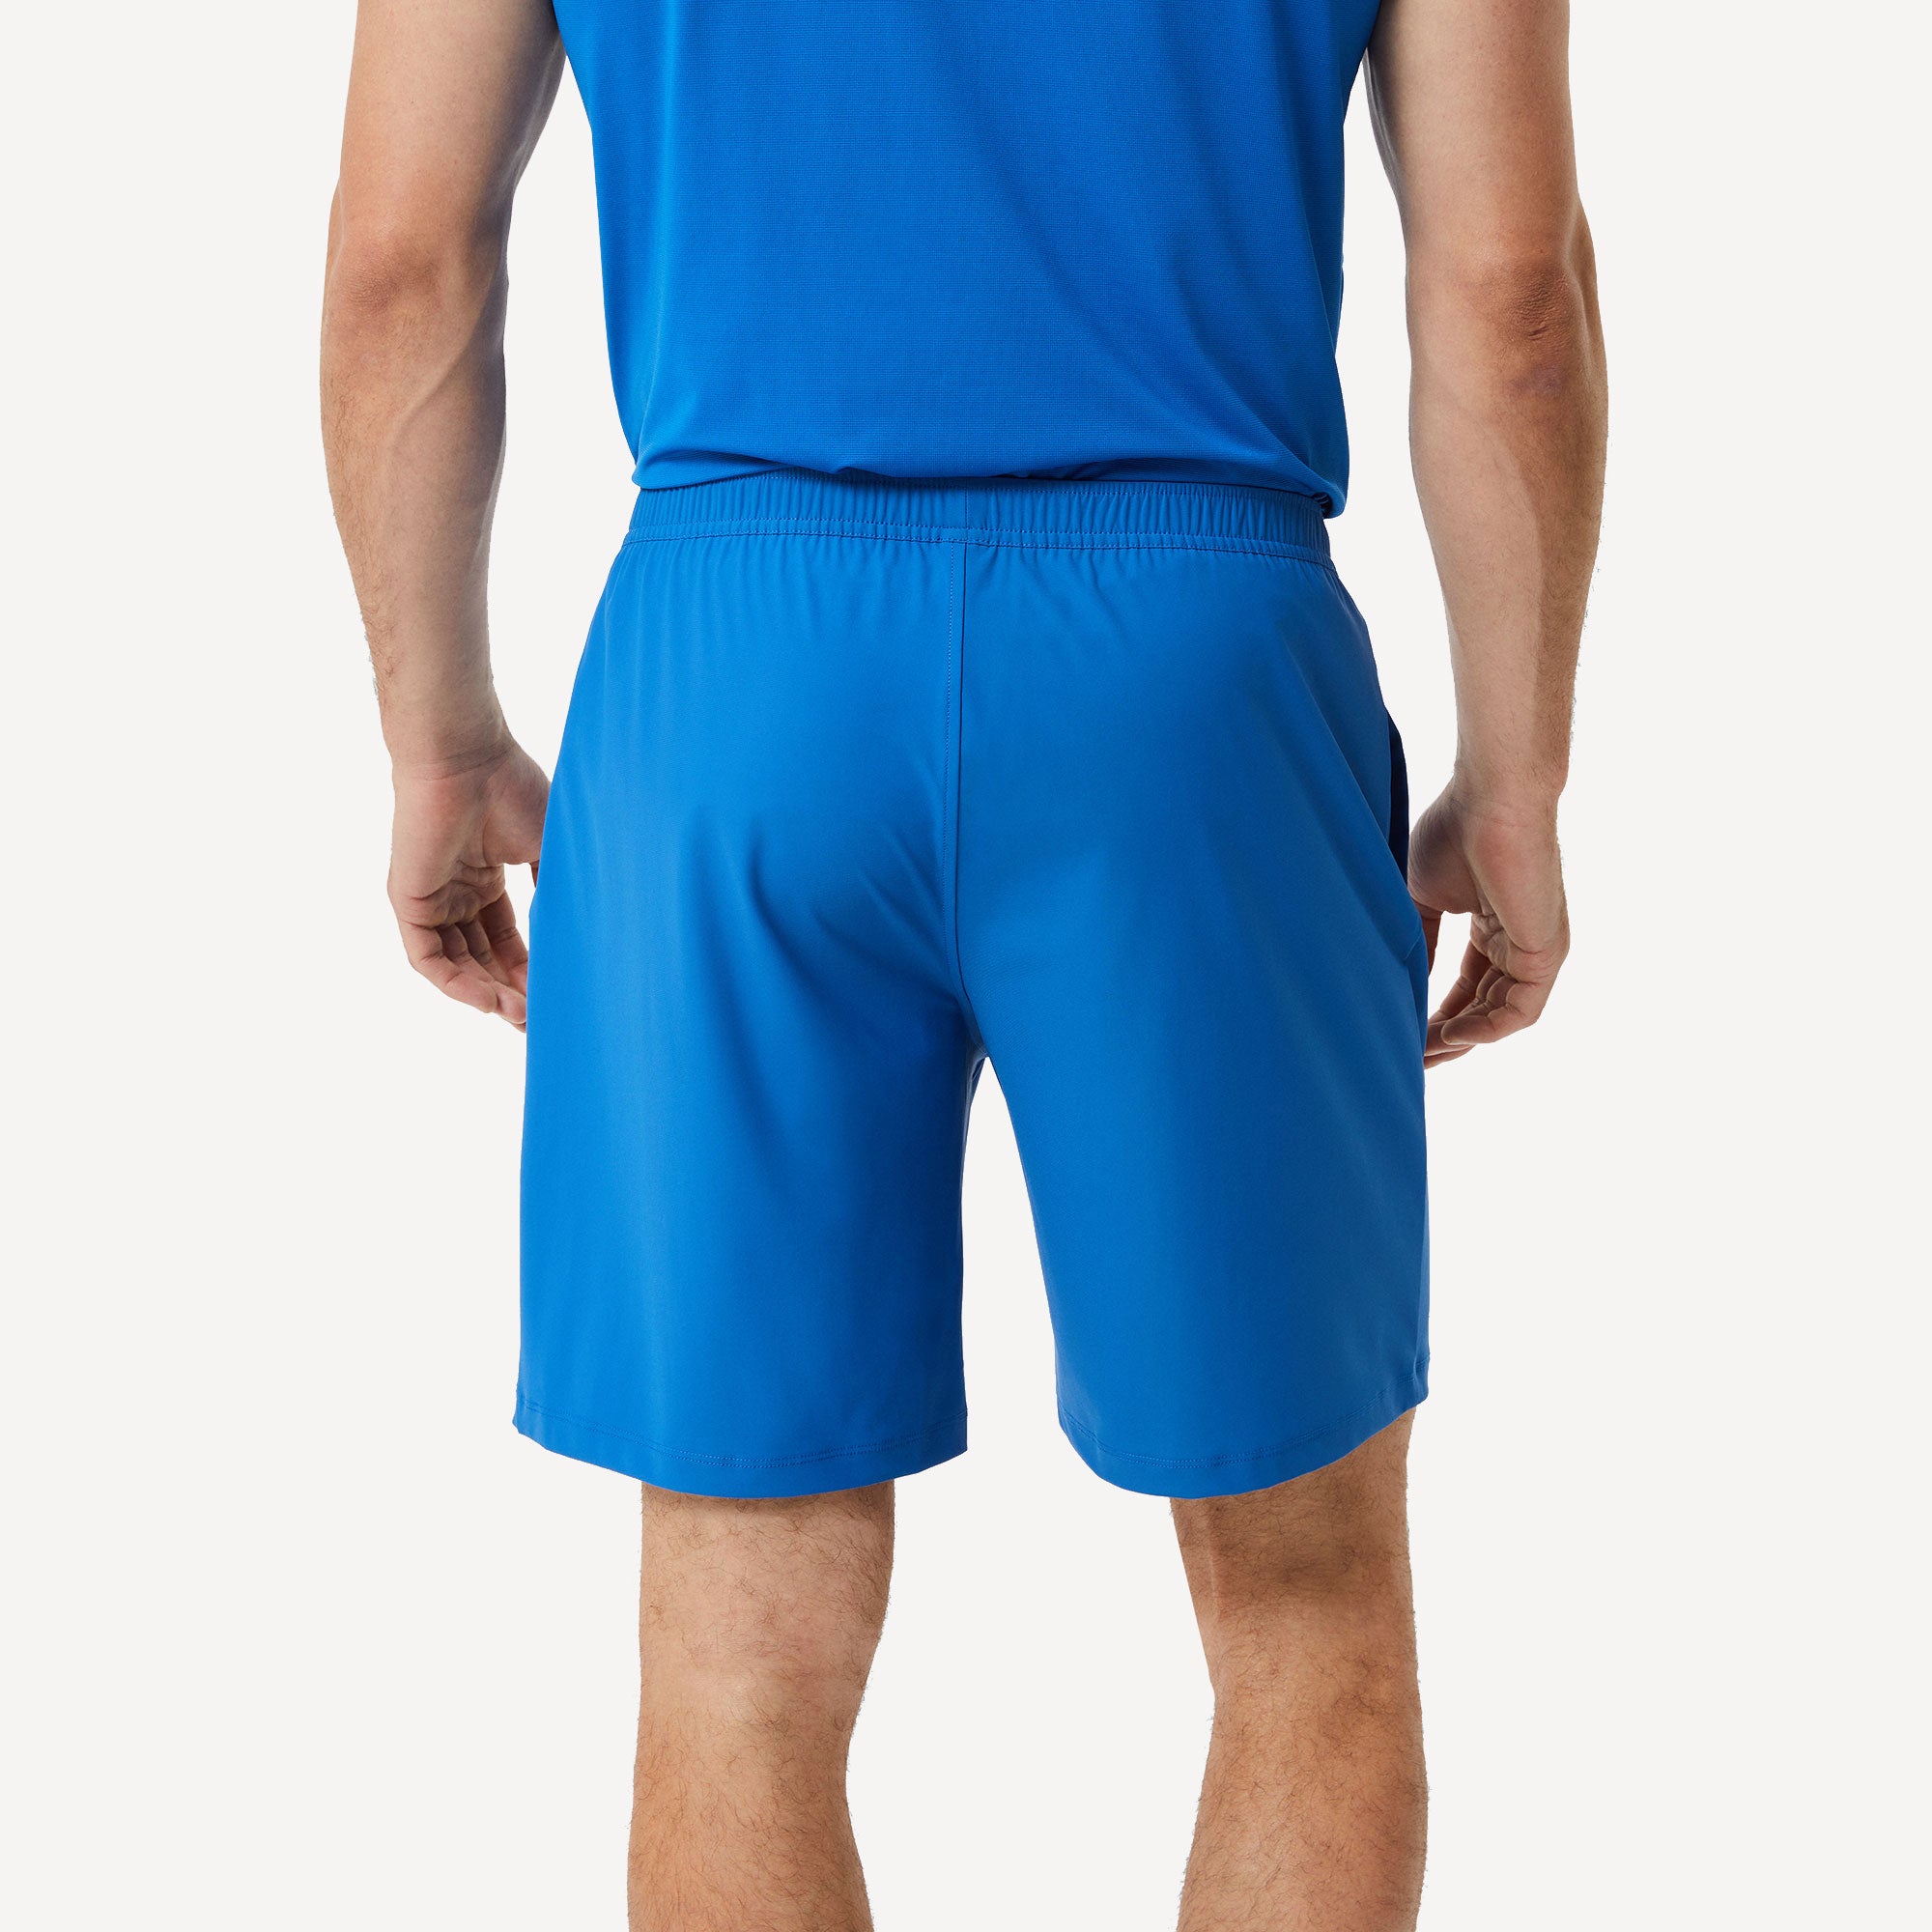 Björn Borg Ace Men's 9-Inch Tennis Shorts - Blue (2)